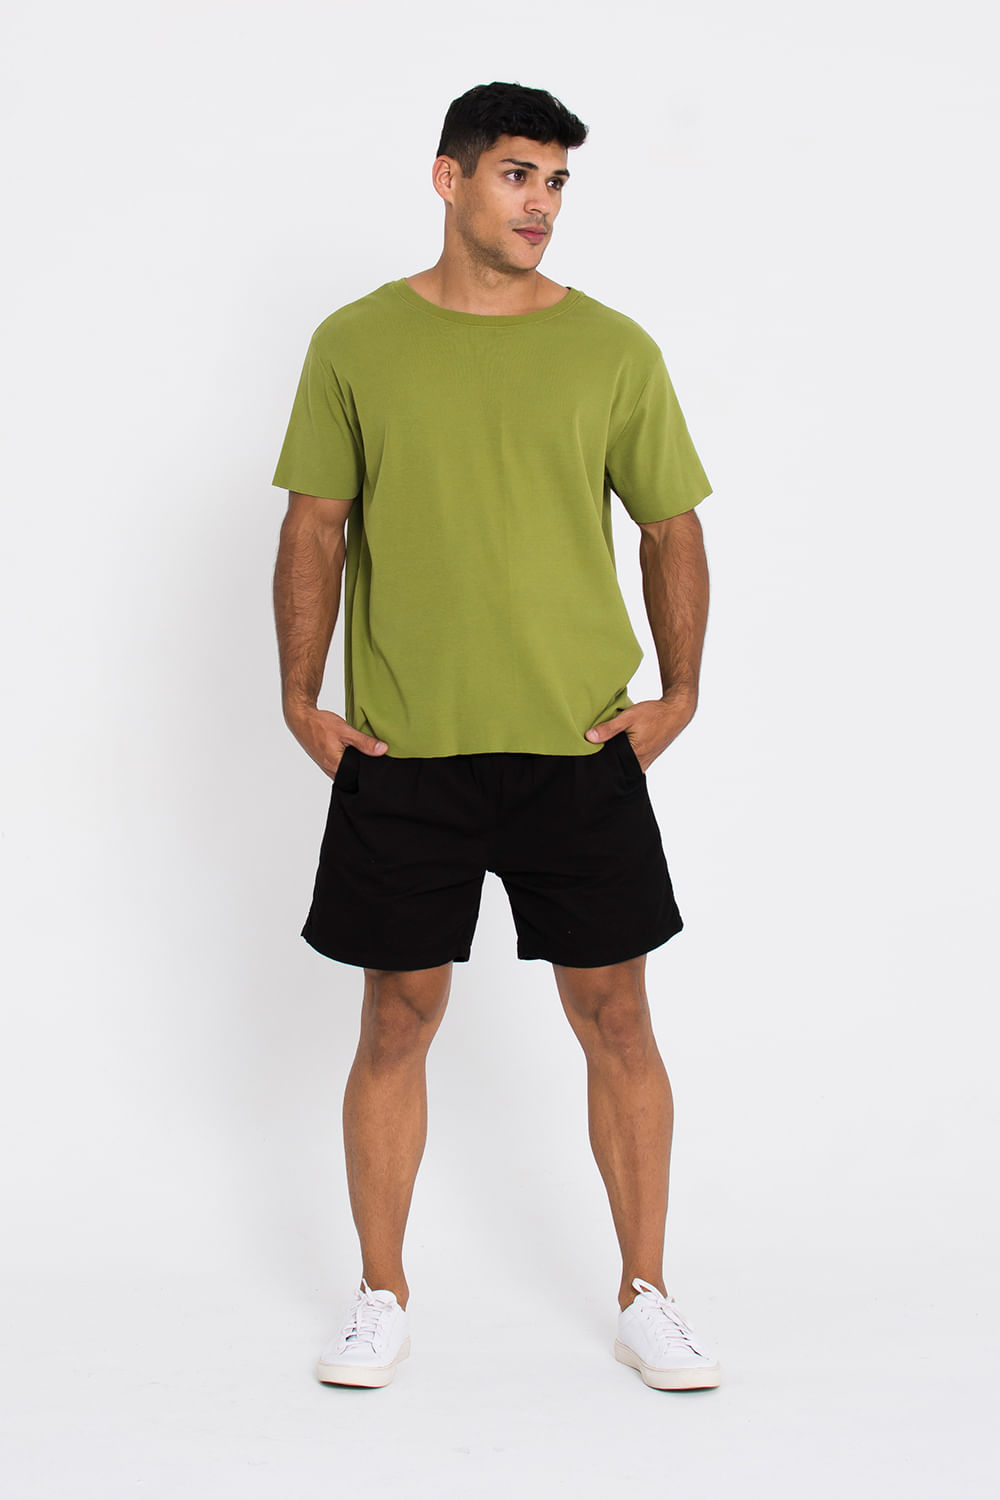 Camiseta-Cotopaxi-Desagulhada-Verde-Modelo